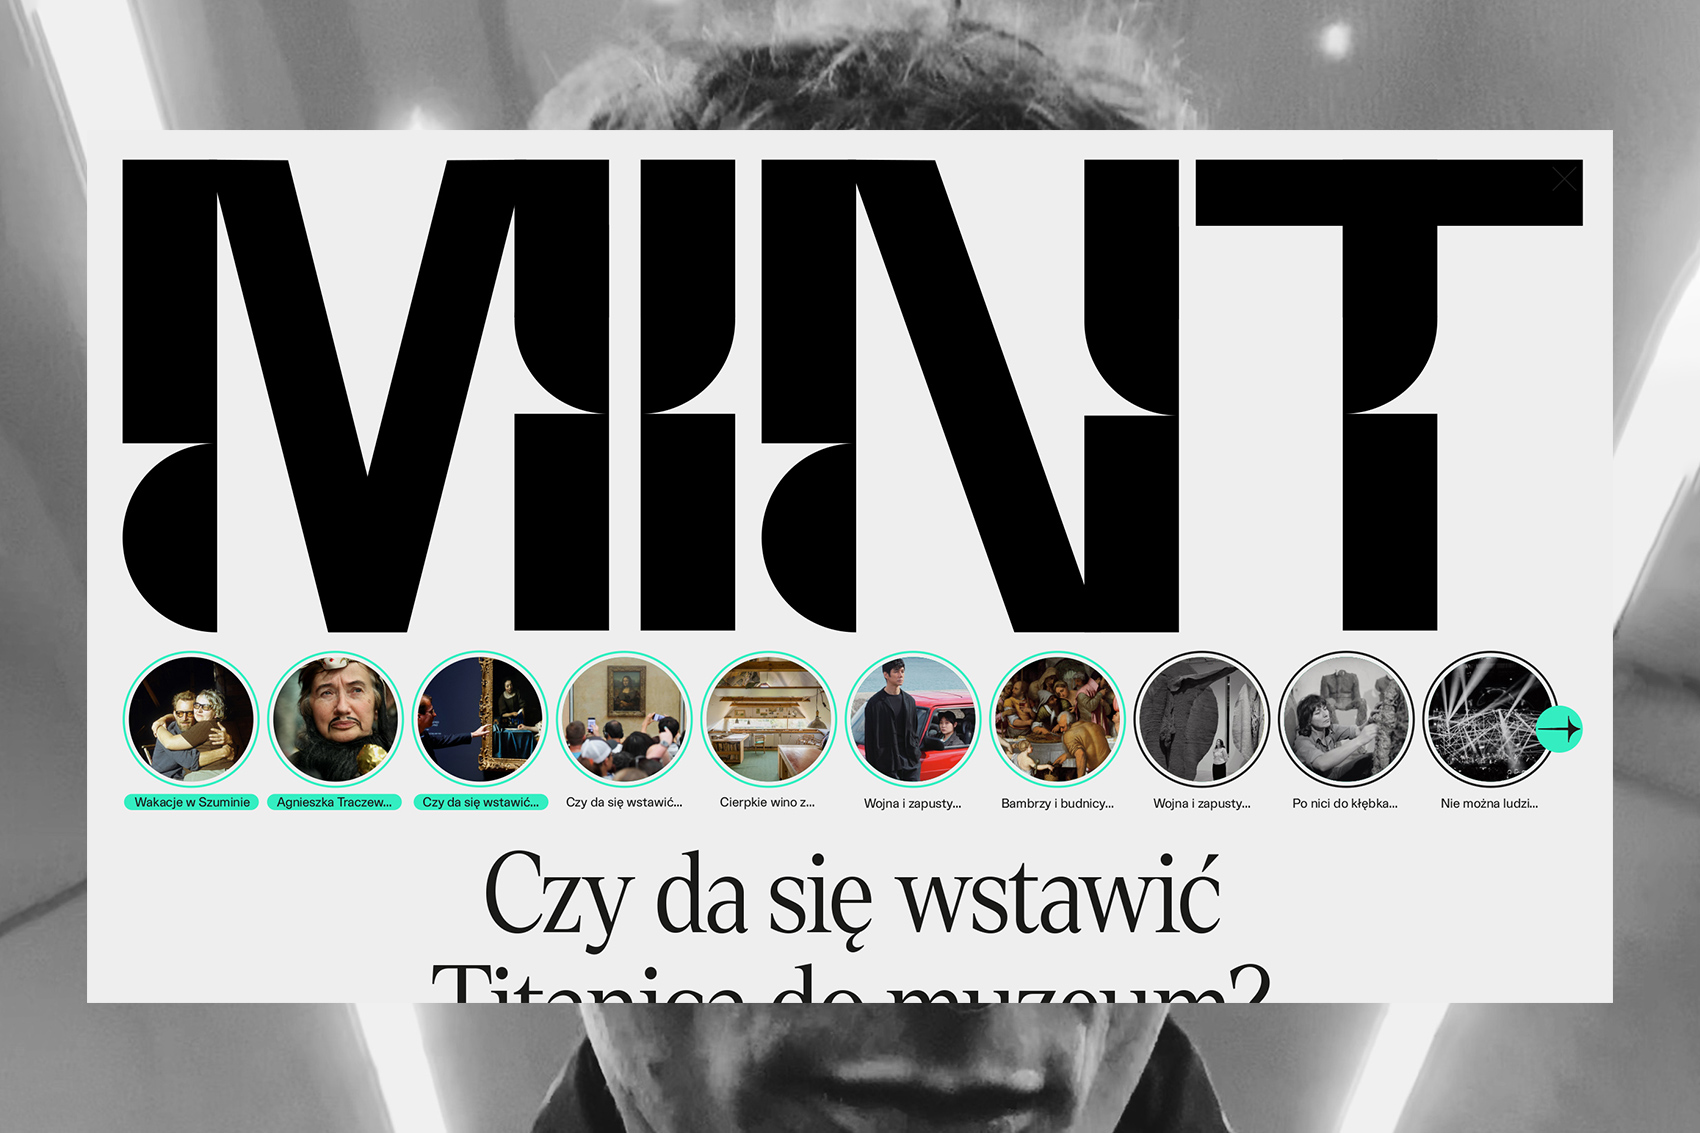 Mint Magazine